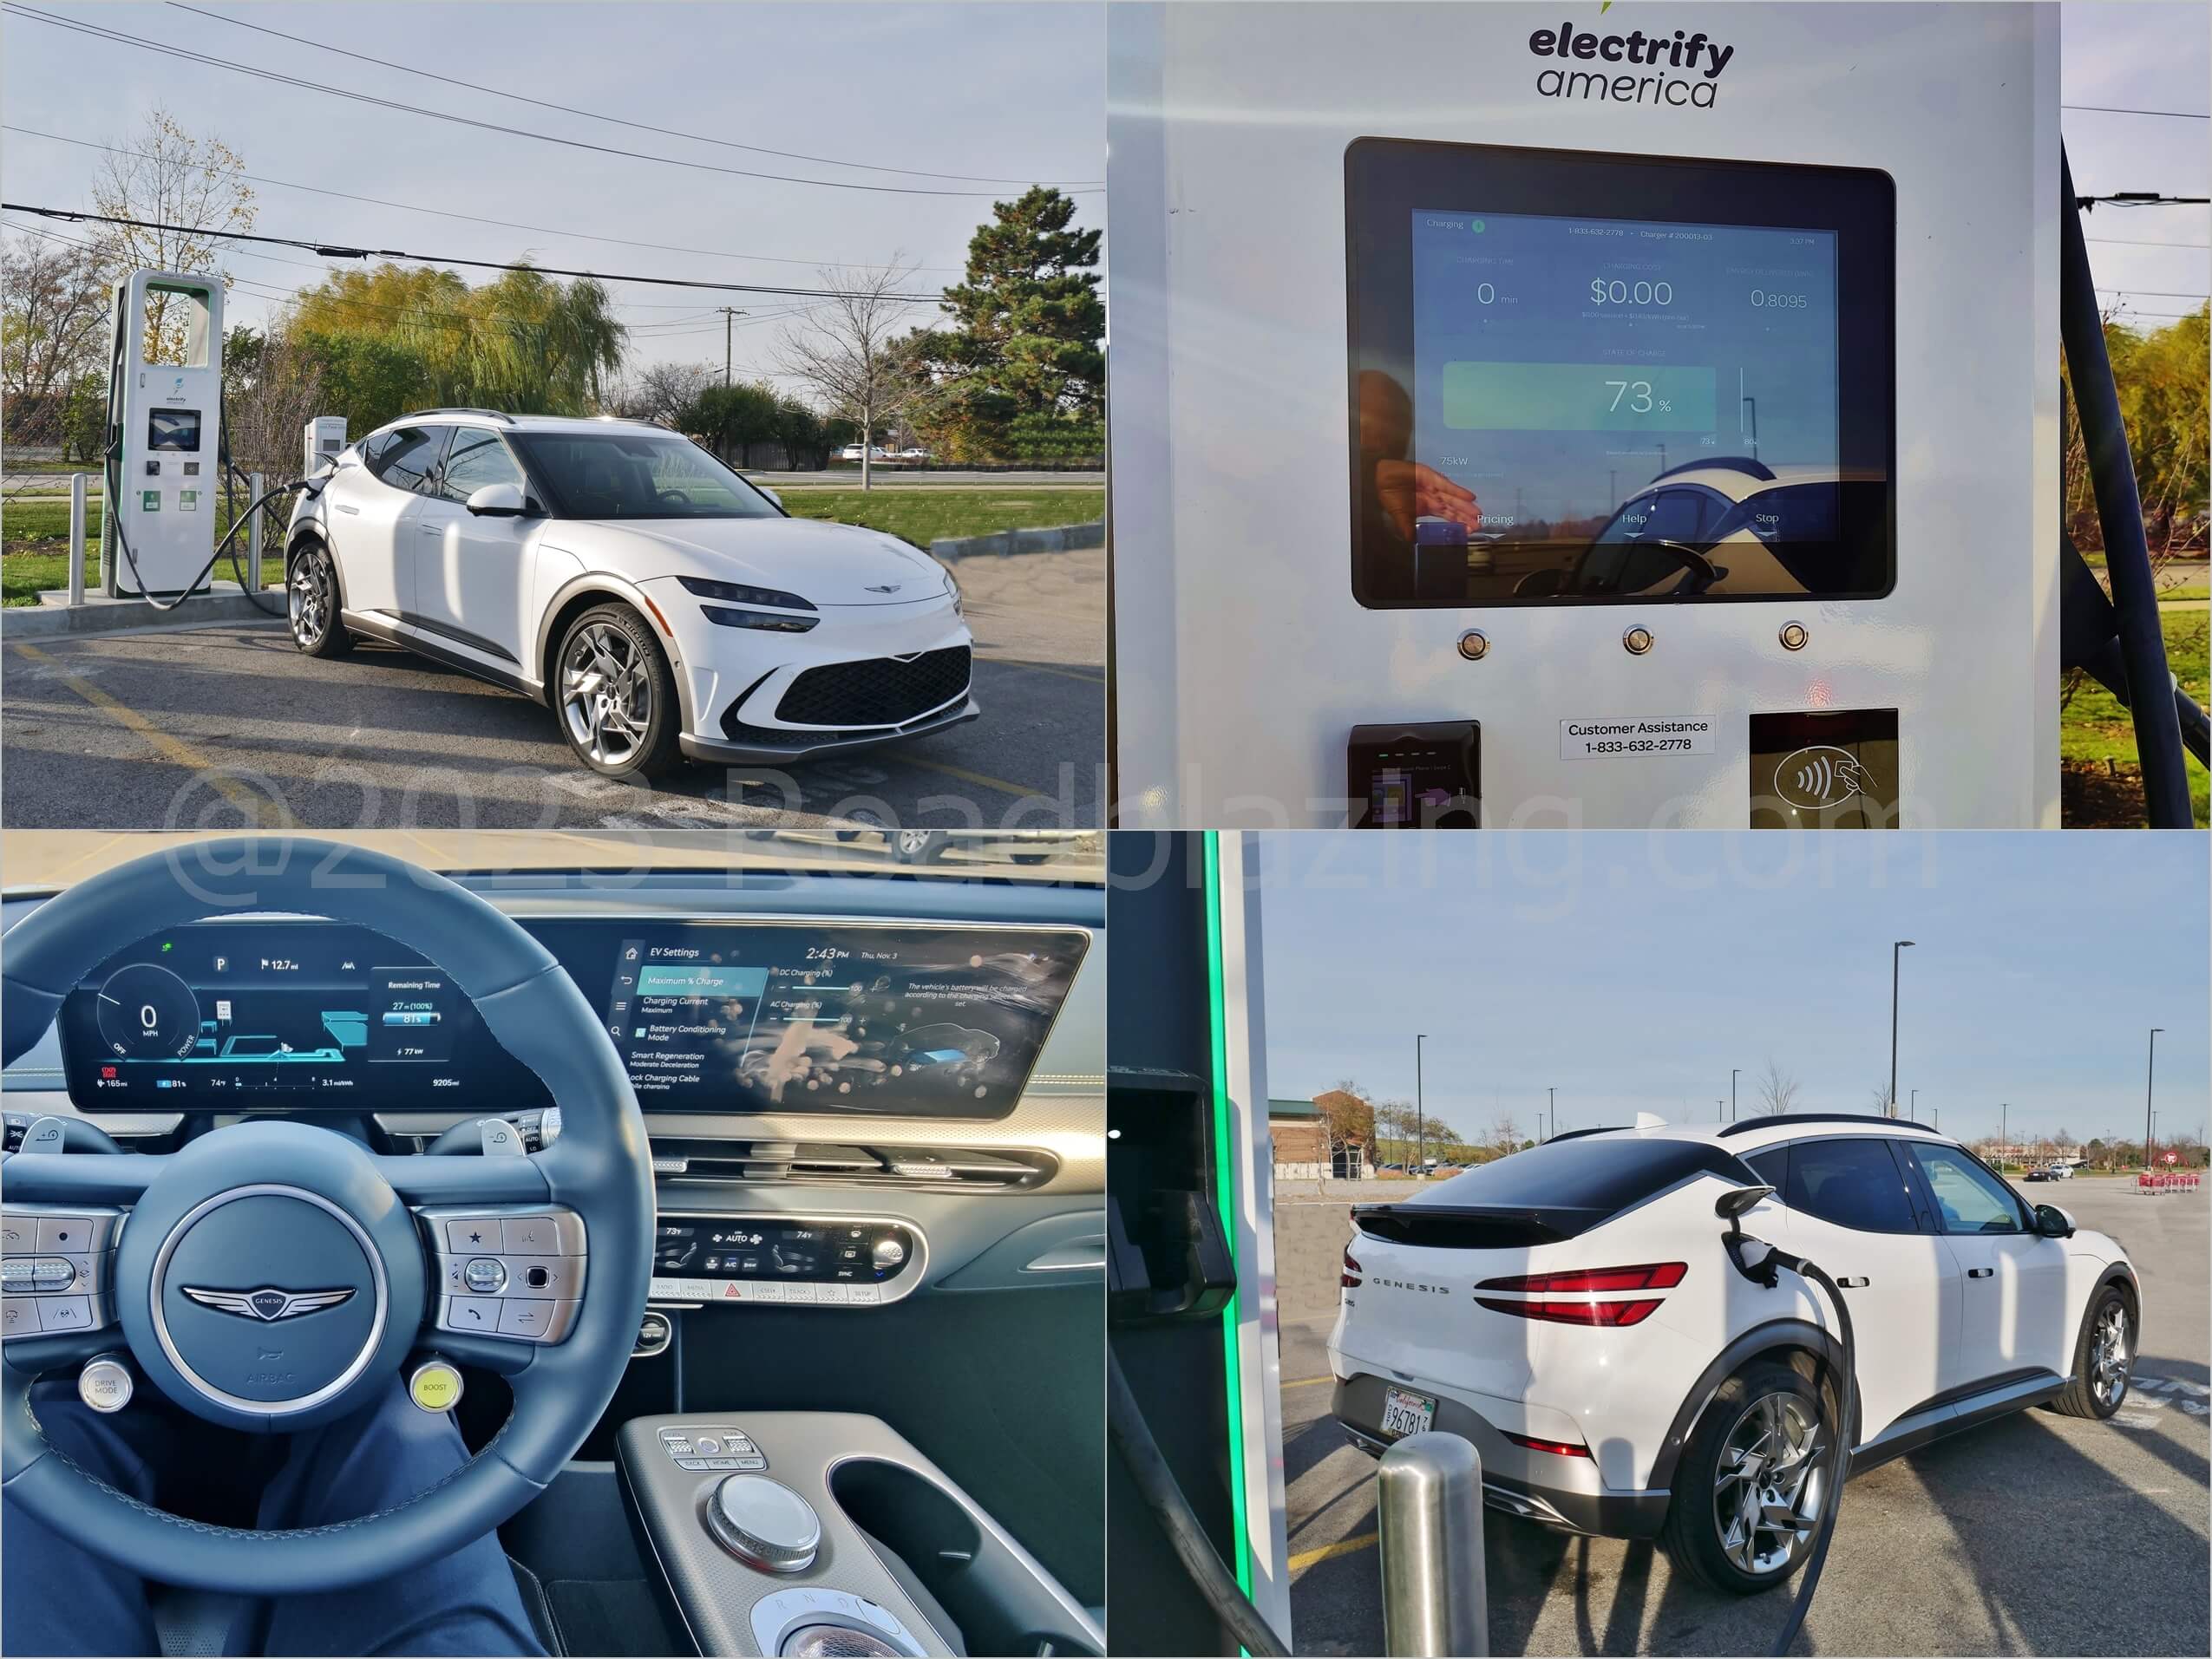 2022 Genesis GV60 Performance AWD EV: charging session at Electrify America 150 kW dispenser, Glenview, Illinois